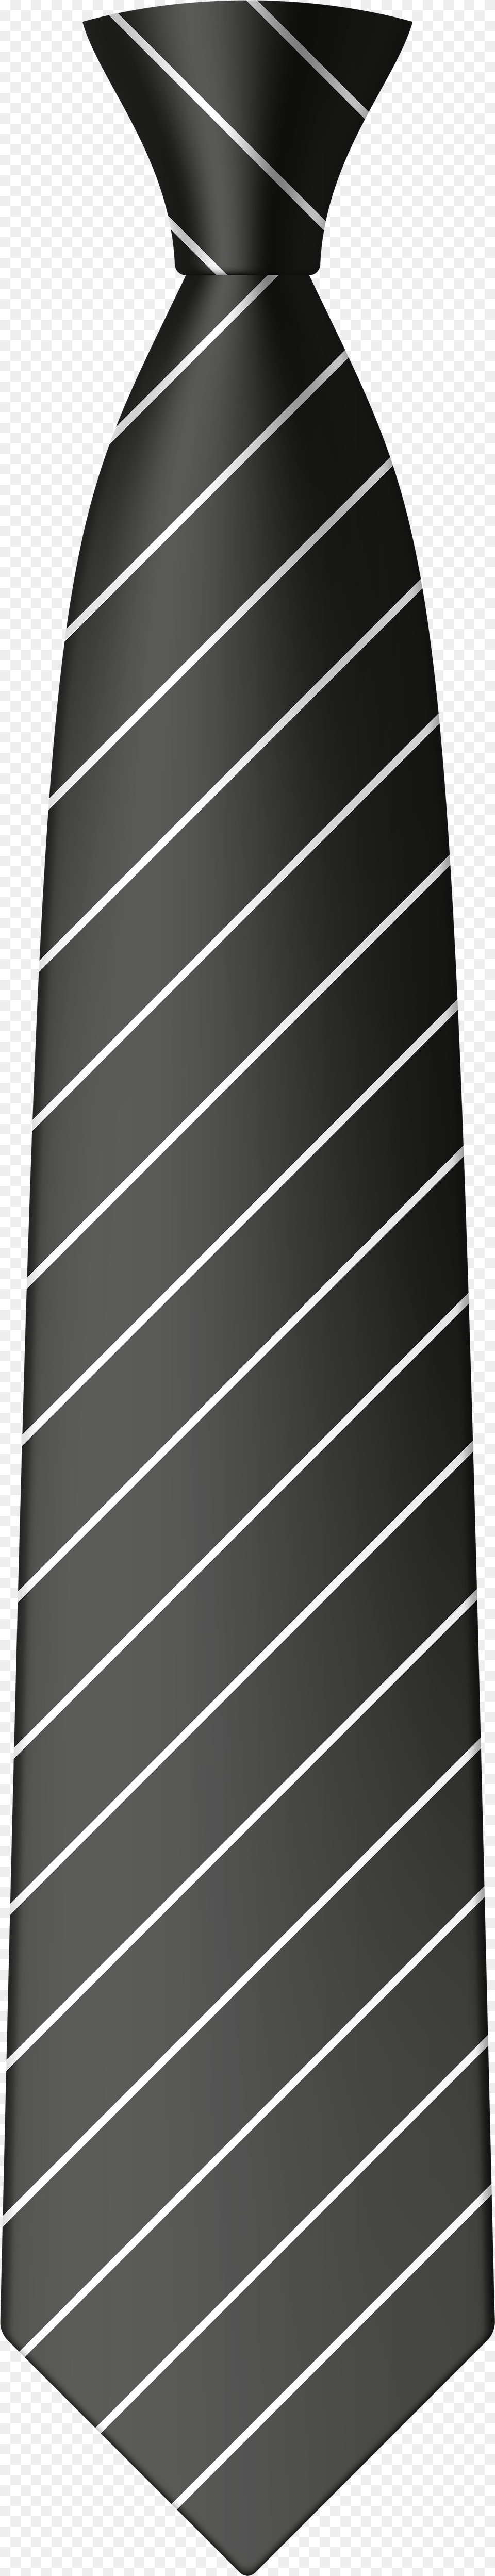 Black Tie Clip Art Image Black And White Tie, Accessories, Formal Wear, Necktie Free Transparent Png